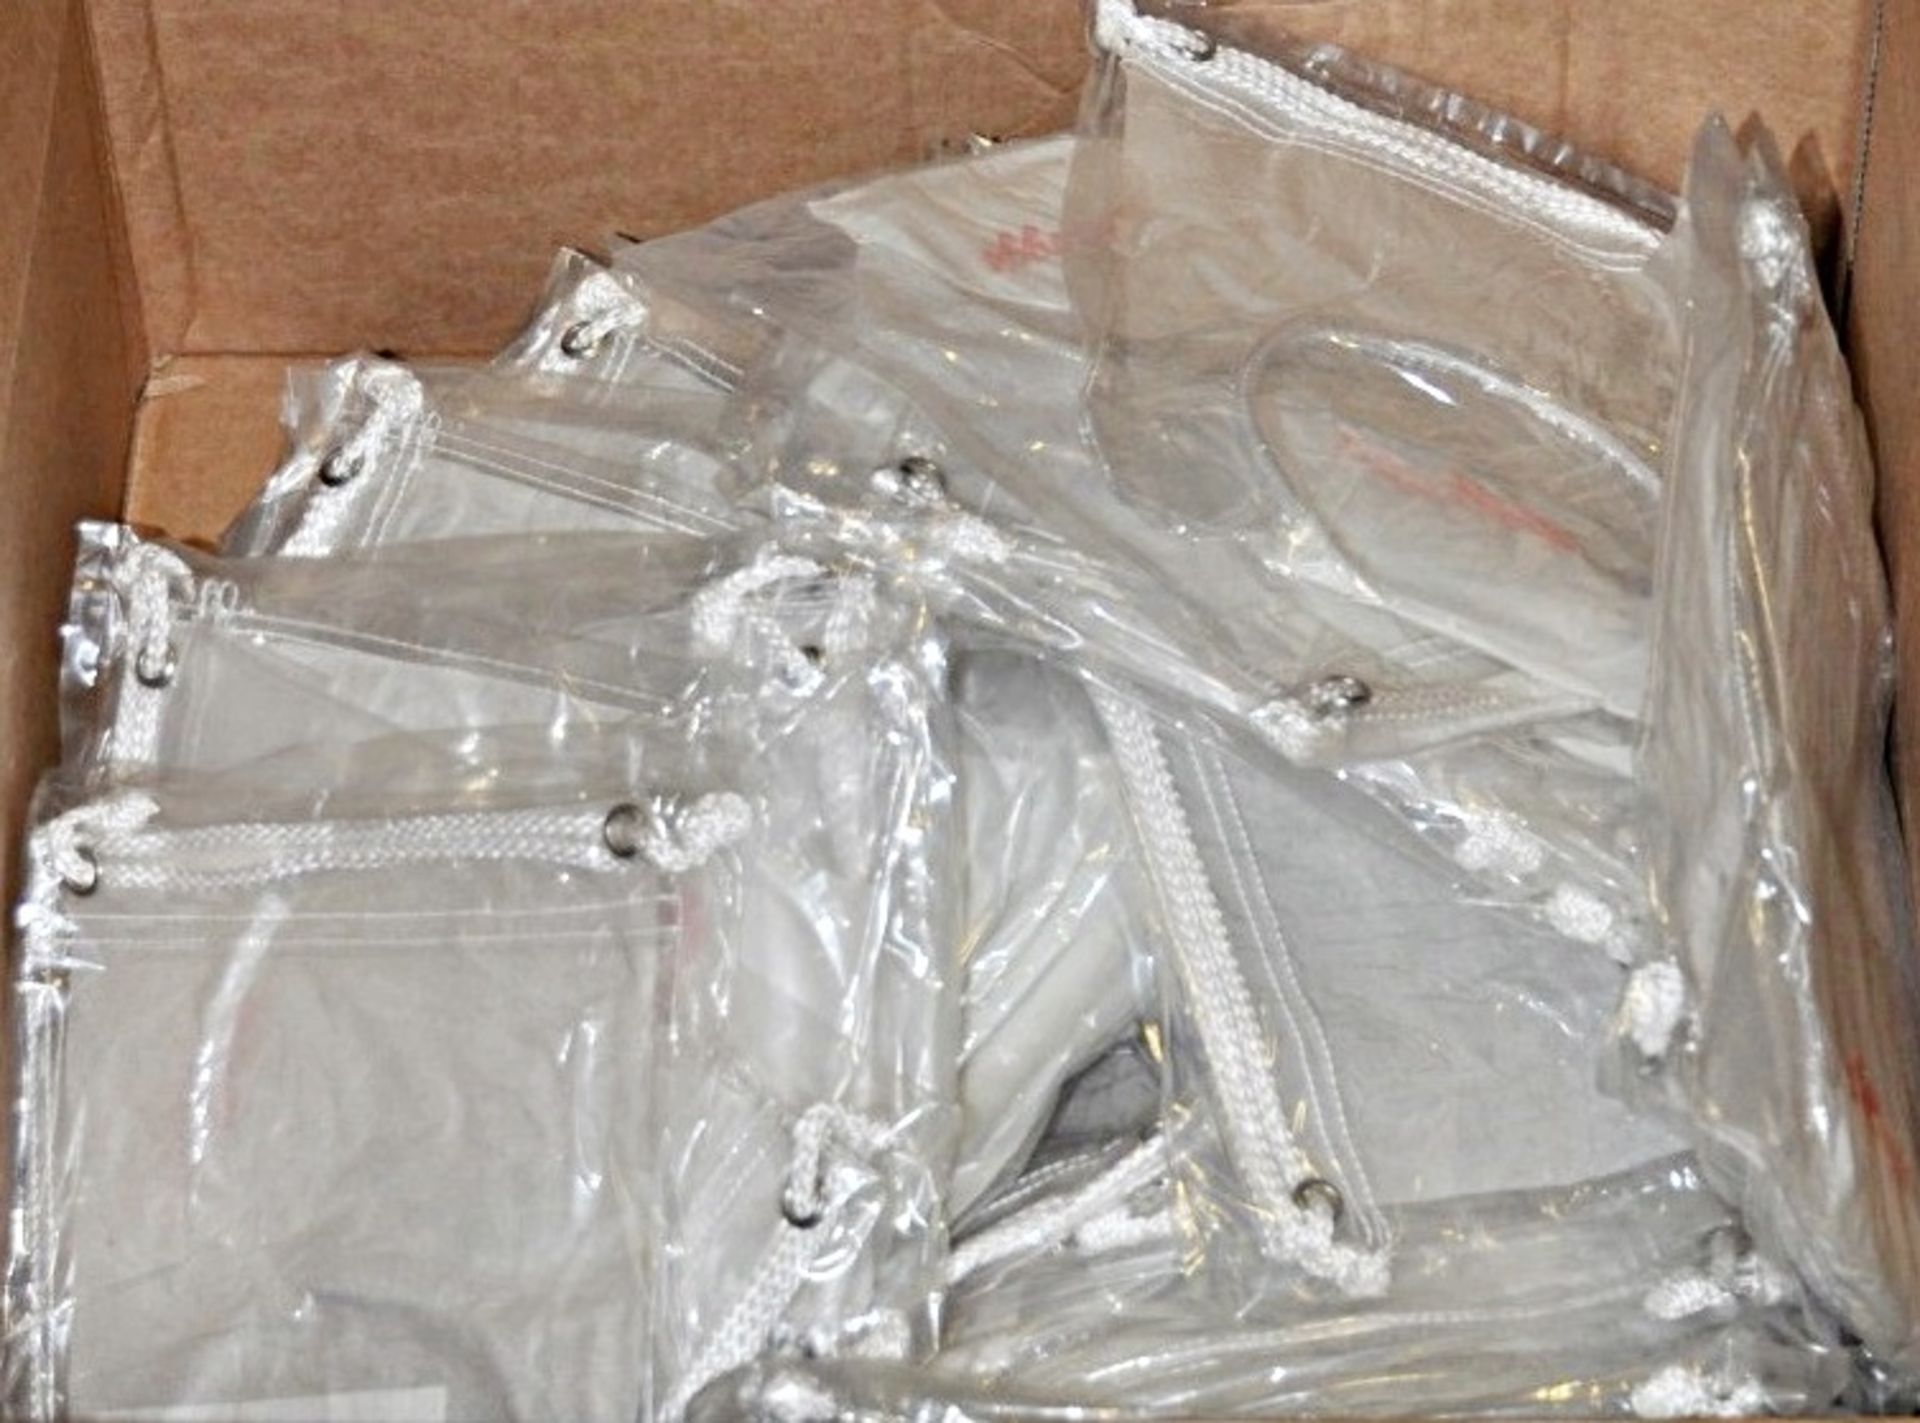 50 x Clear PVC Drawstring Bag with Kellogg's Branding - 25cm x20cm x13cm - CL008 - Location: Bury